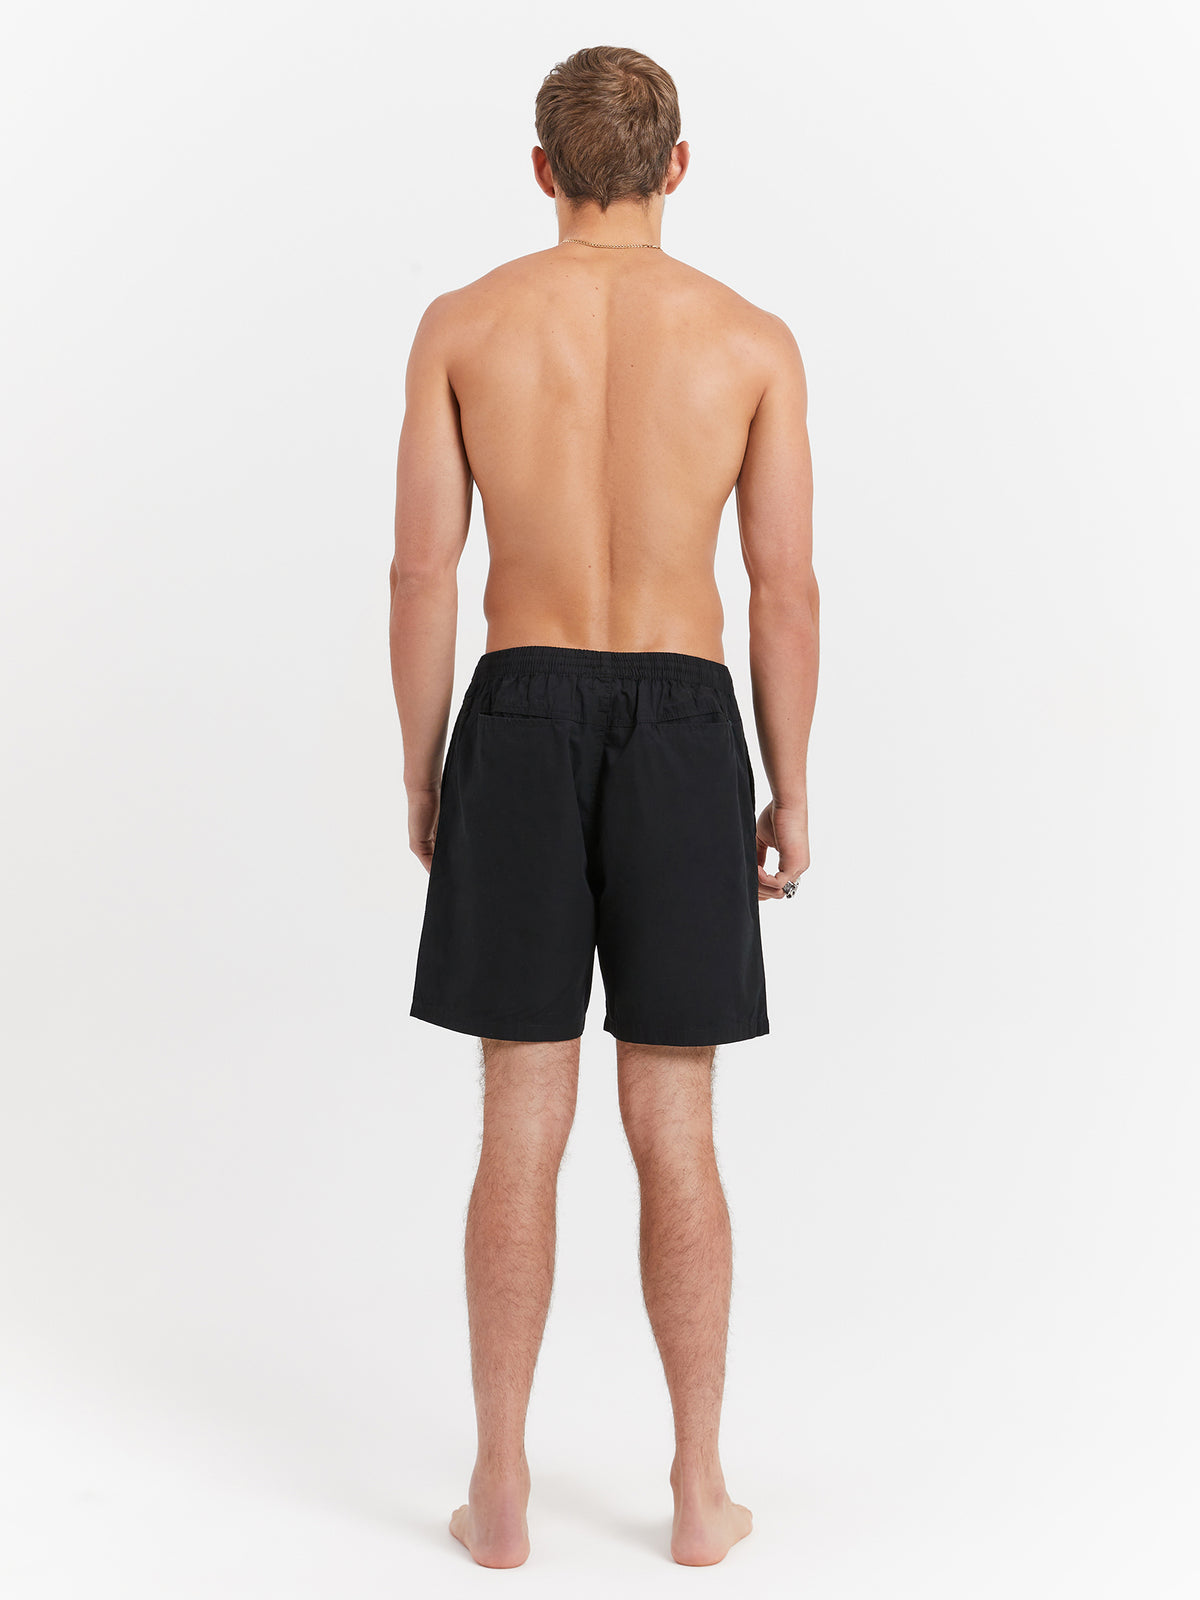 Basic Stock Beach Shorts in Black